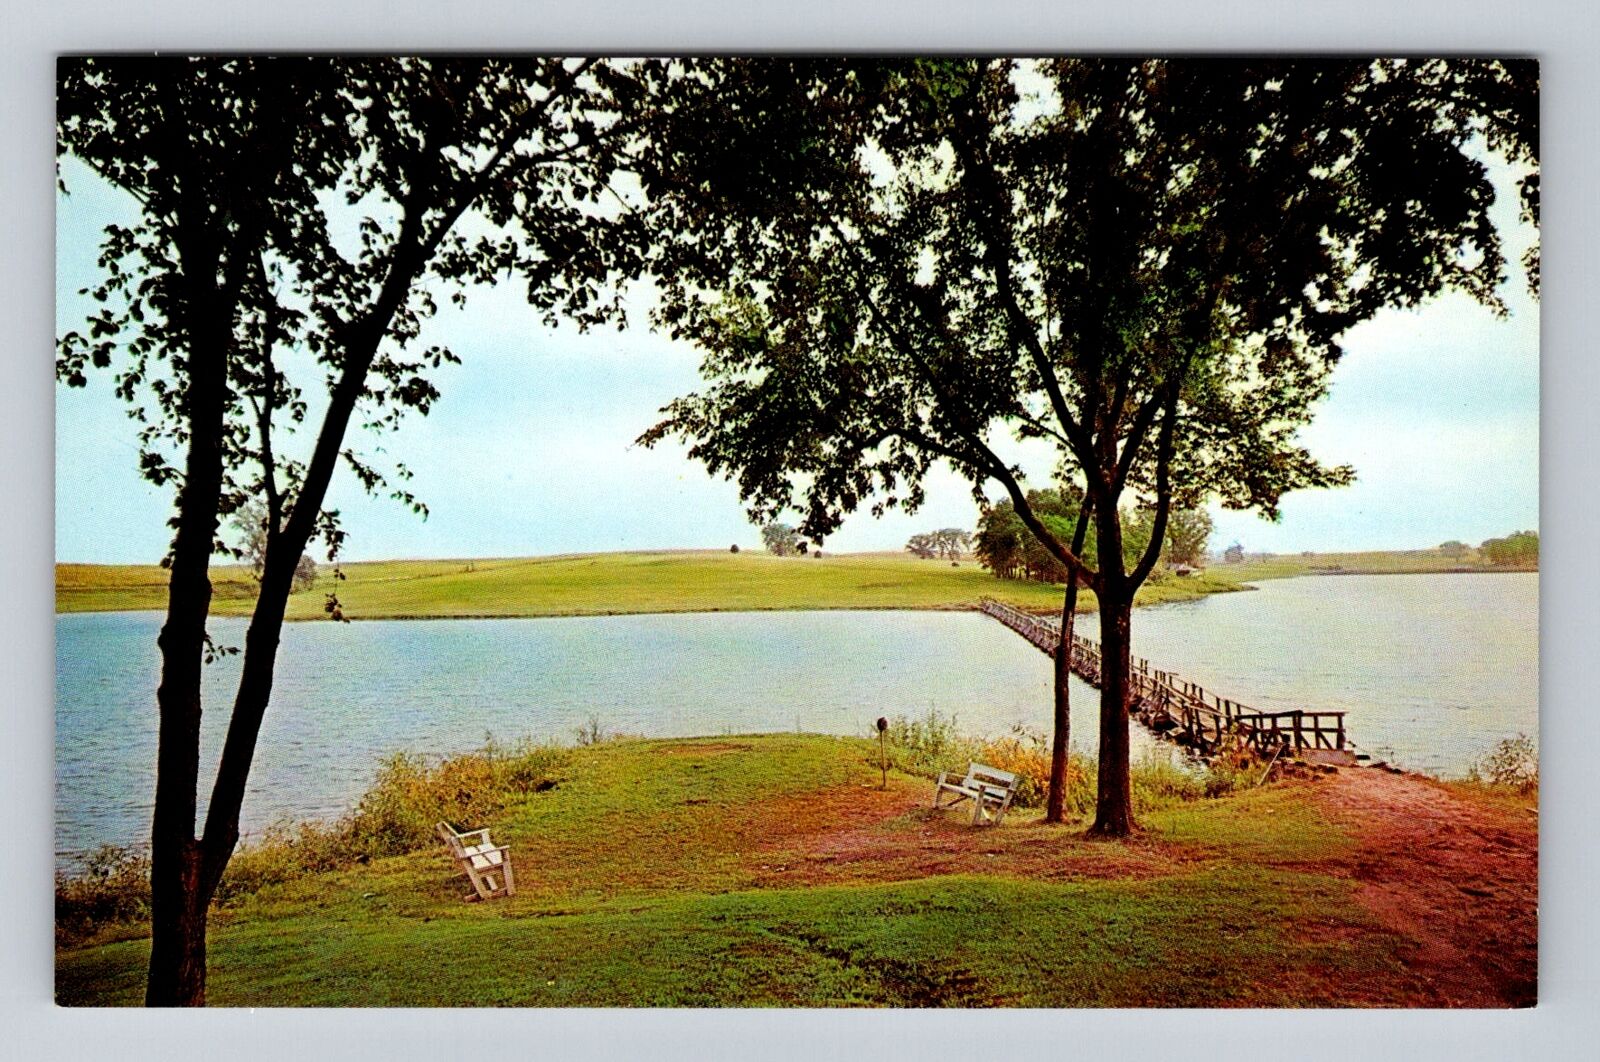 Fairfield IA-Iowa, Walton Lake, Golf Course, Antique Vintage Souvenir Postcard